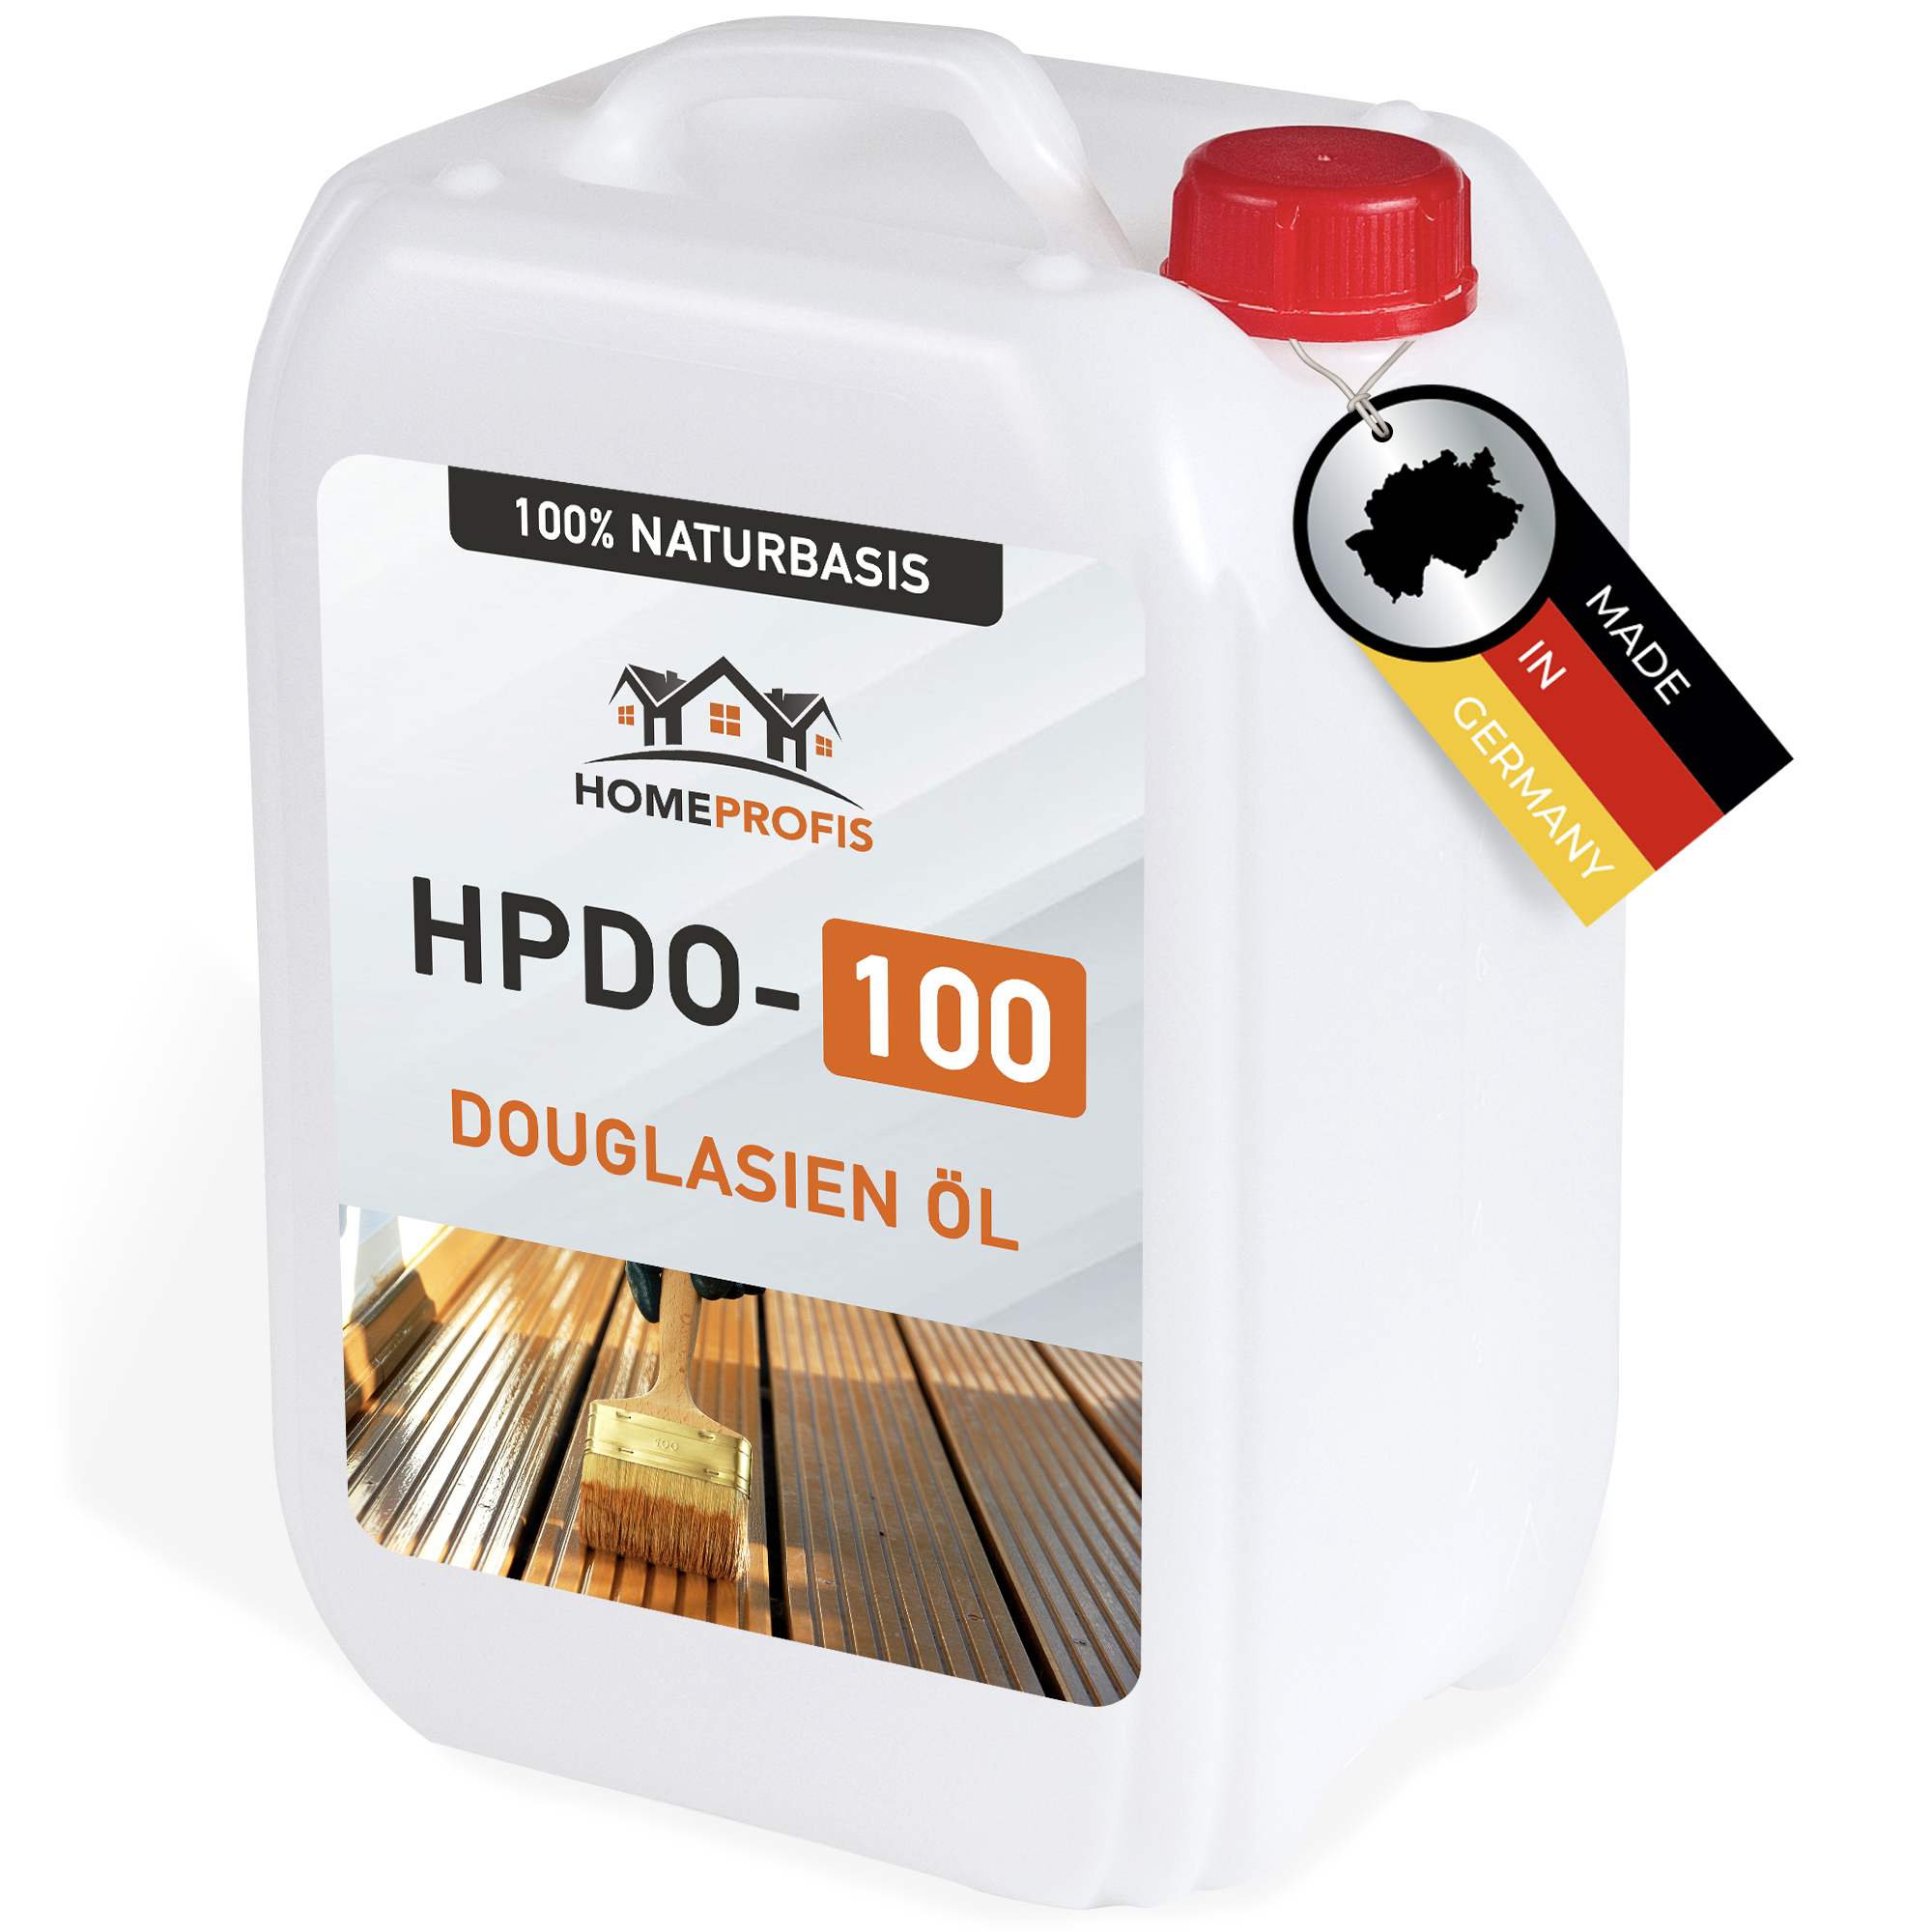 HPDO-100 Douglasienholz Öl auf natürlicher Basis